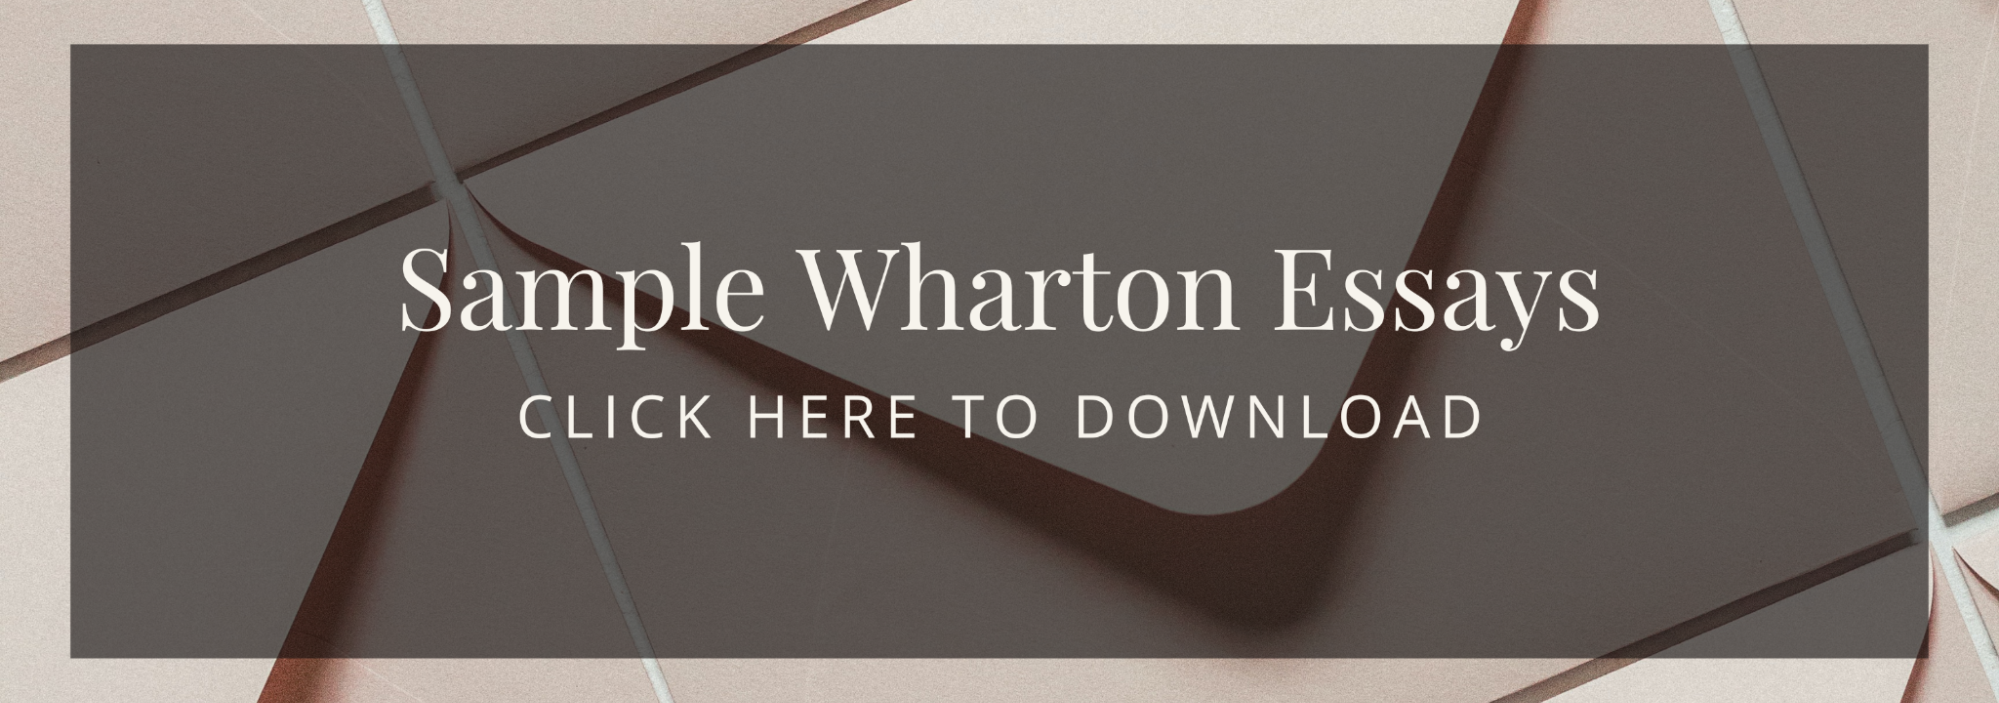 50 successful wharton business school essays pdf